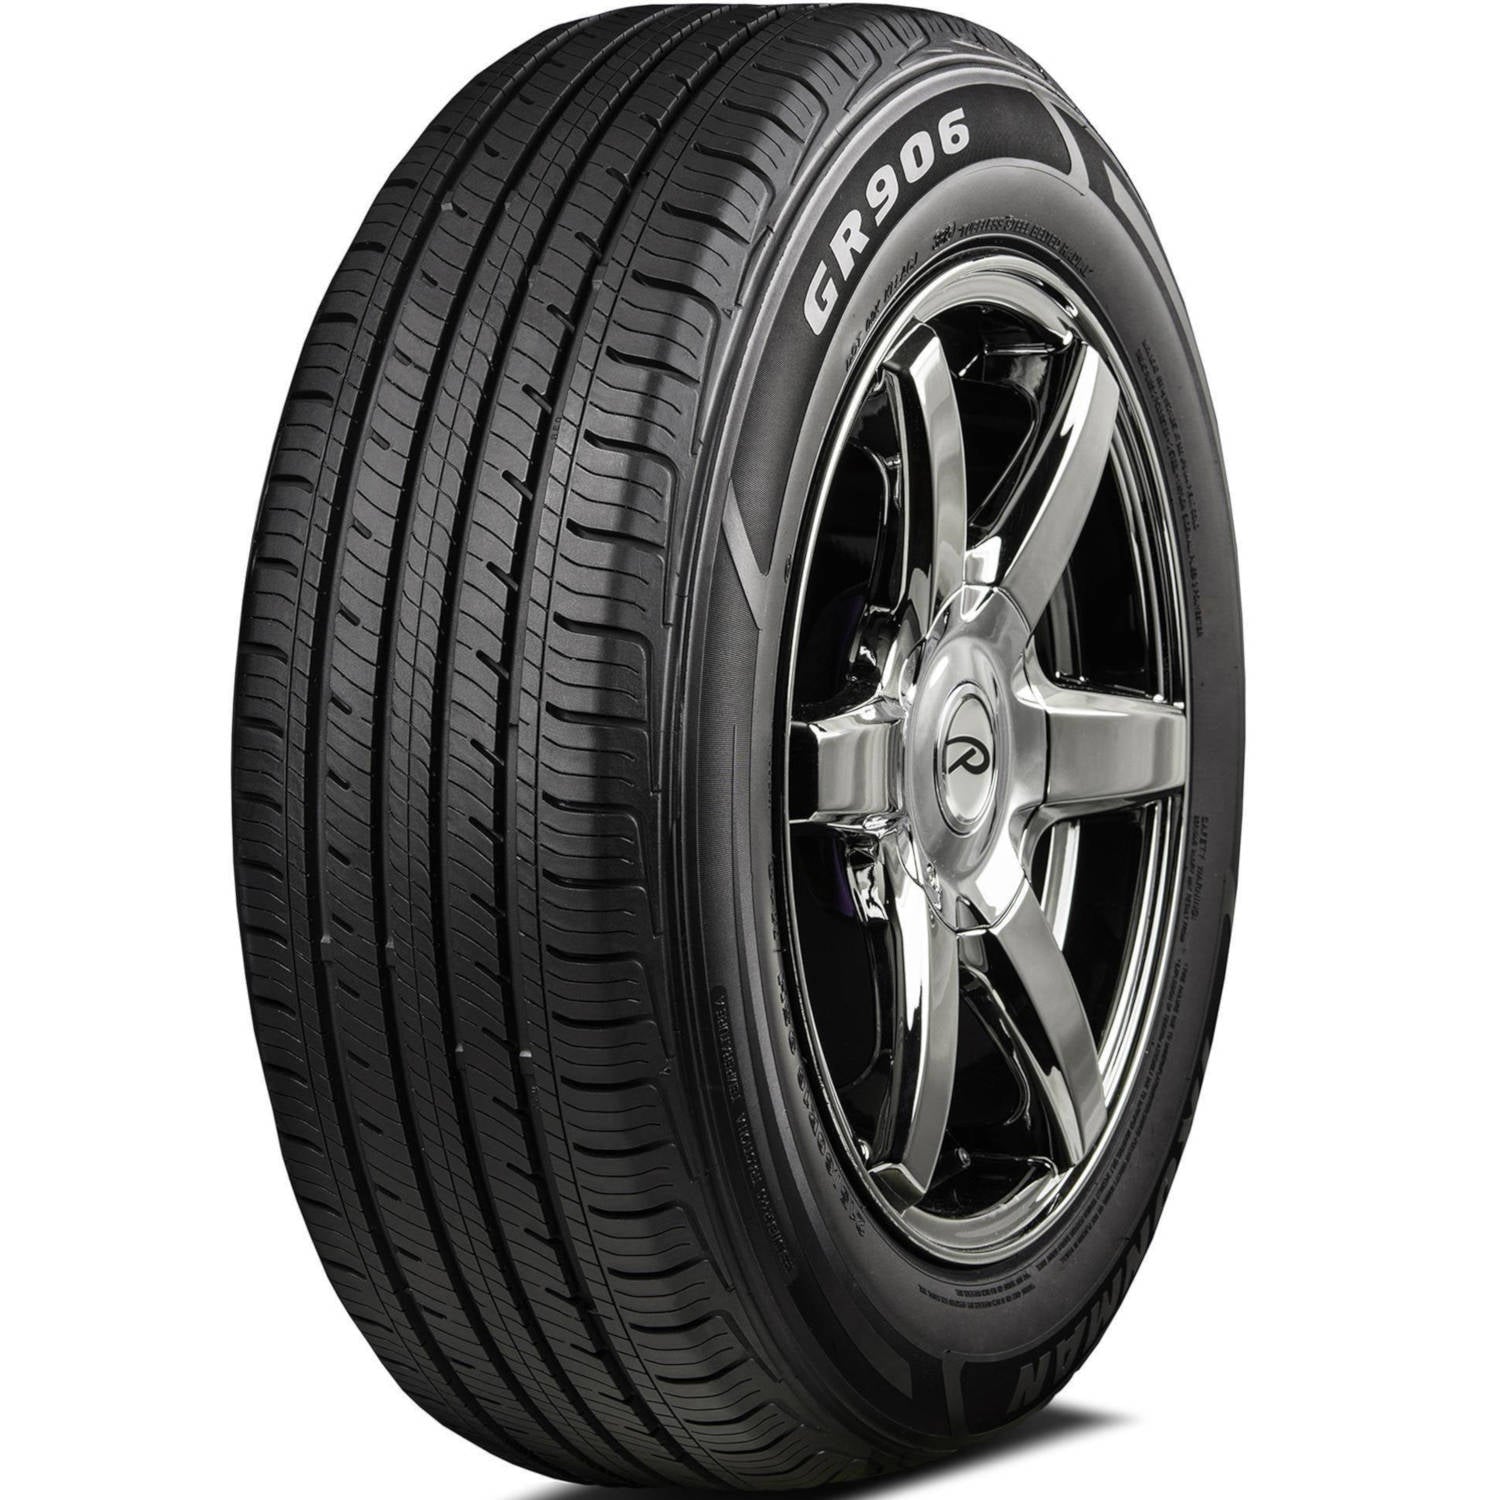 IRONMAN GR906 215/60R15 (25.2X8.5R 15) Tires